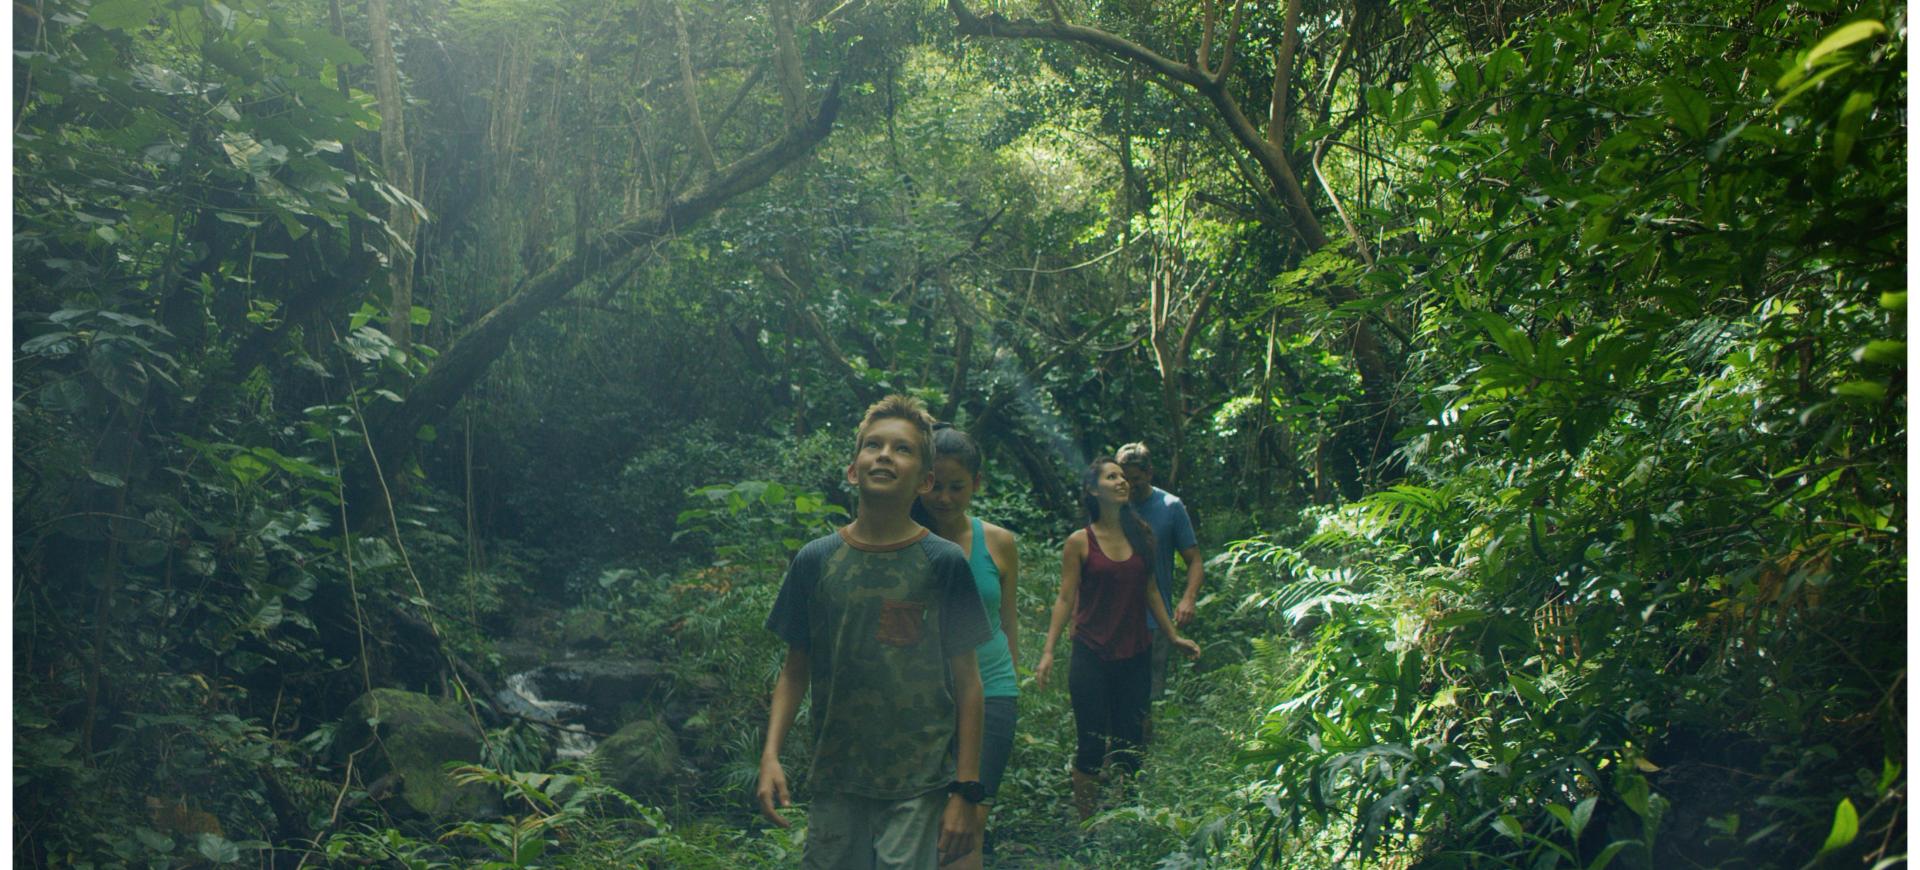 Family hiking through a rainforest and exploring on the island of Kauai Hawaii